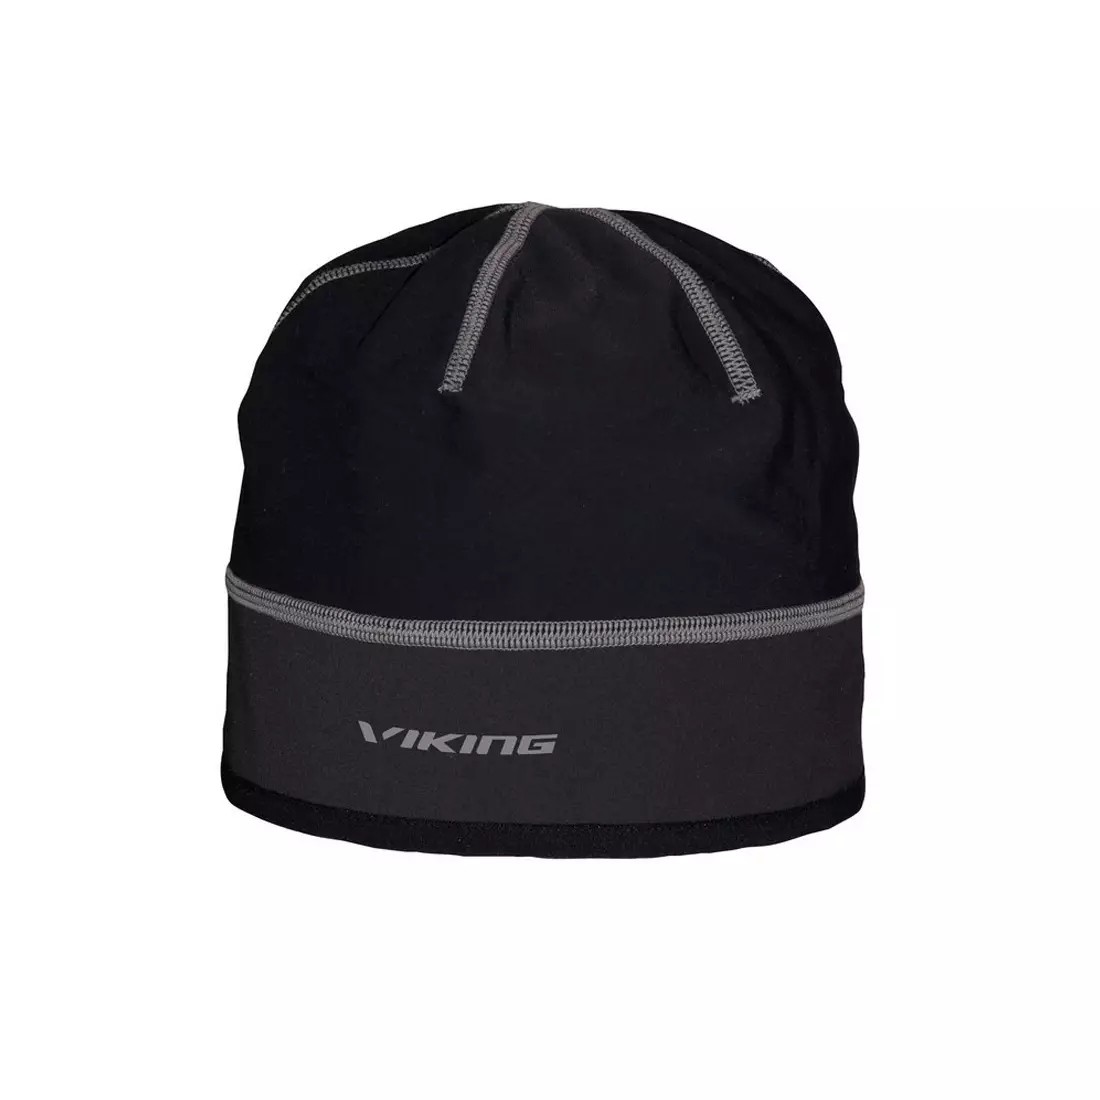 VIKING universal winter hat Palmer GORE-TEX Infinium black 215/16/2016/08/58